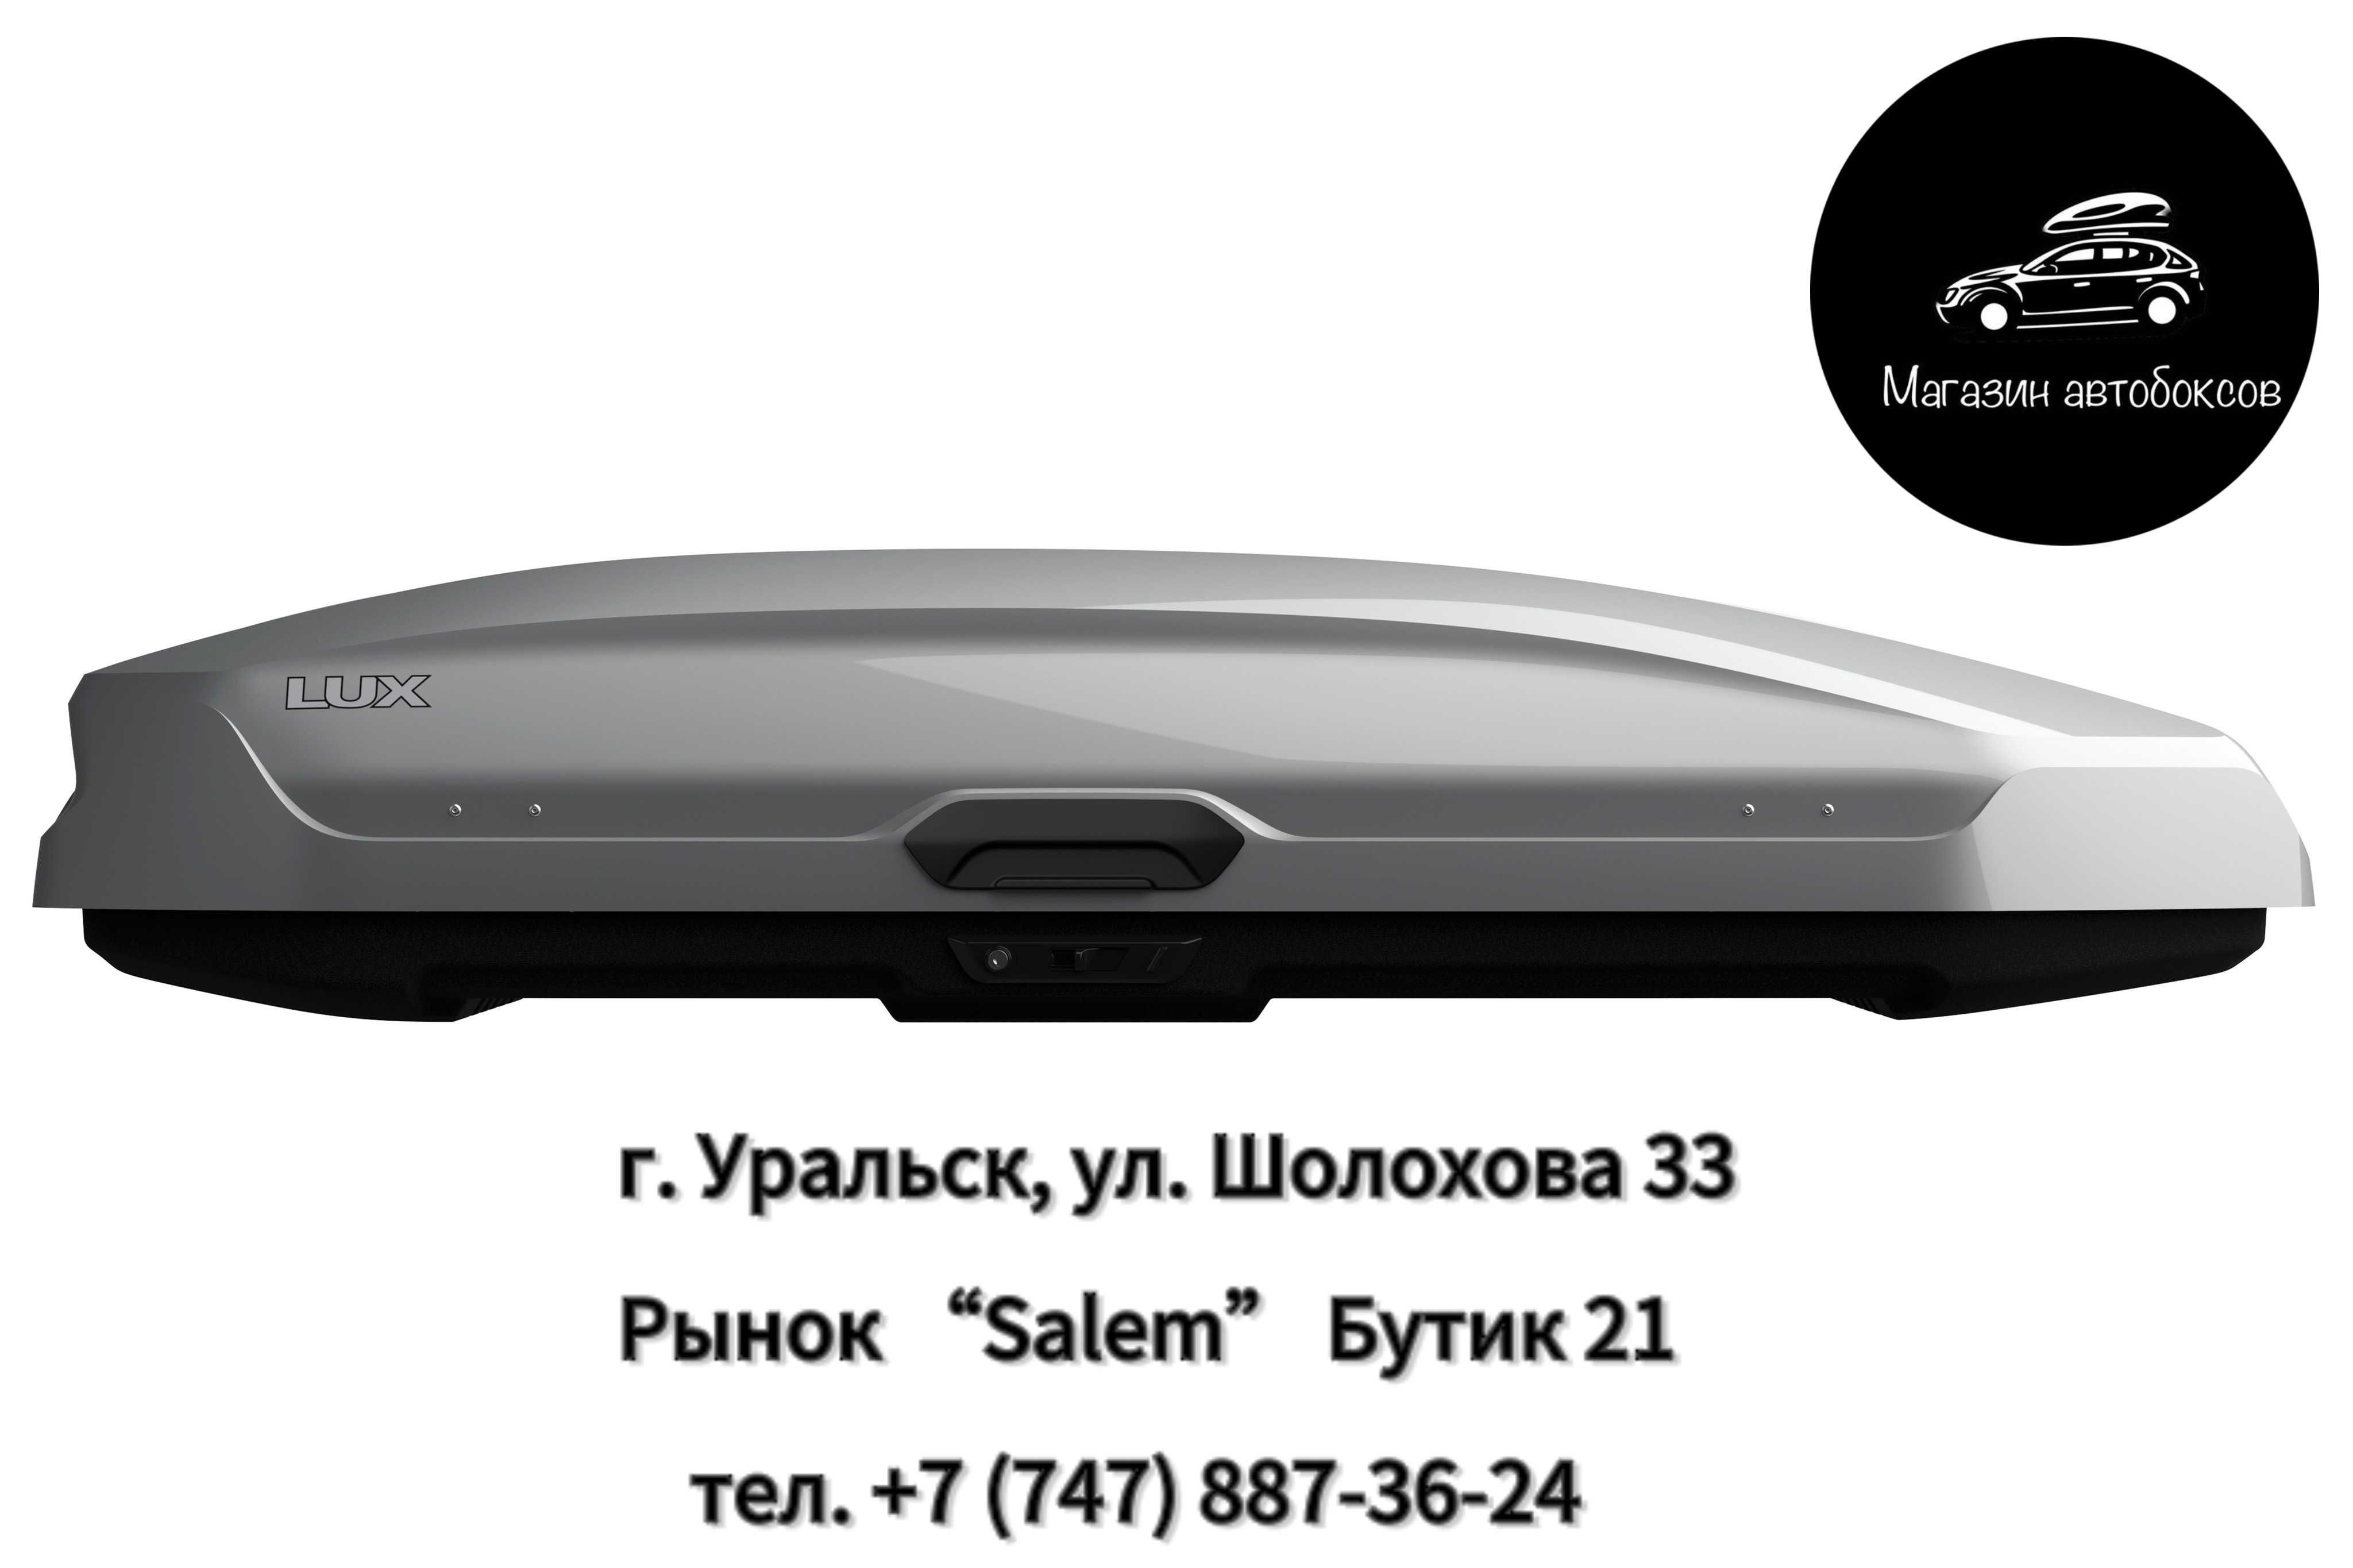 Автобокс LUX "TAVR 197" серый (глянцевый) двусторонний 520л.